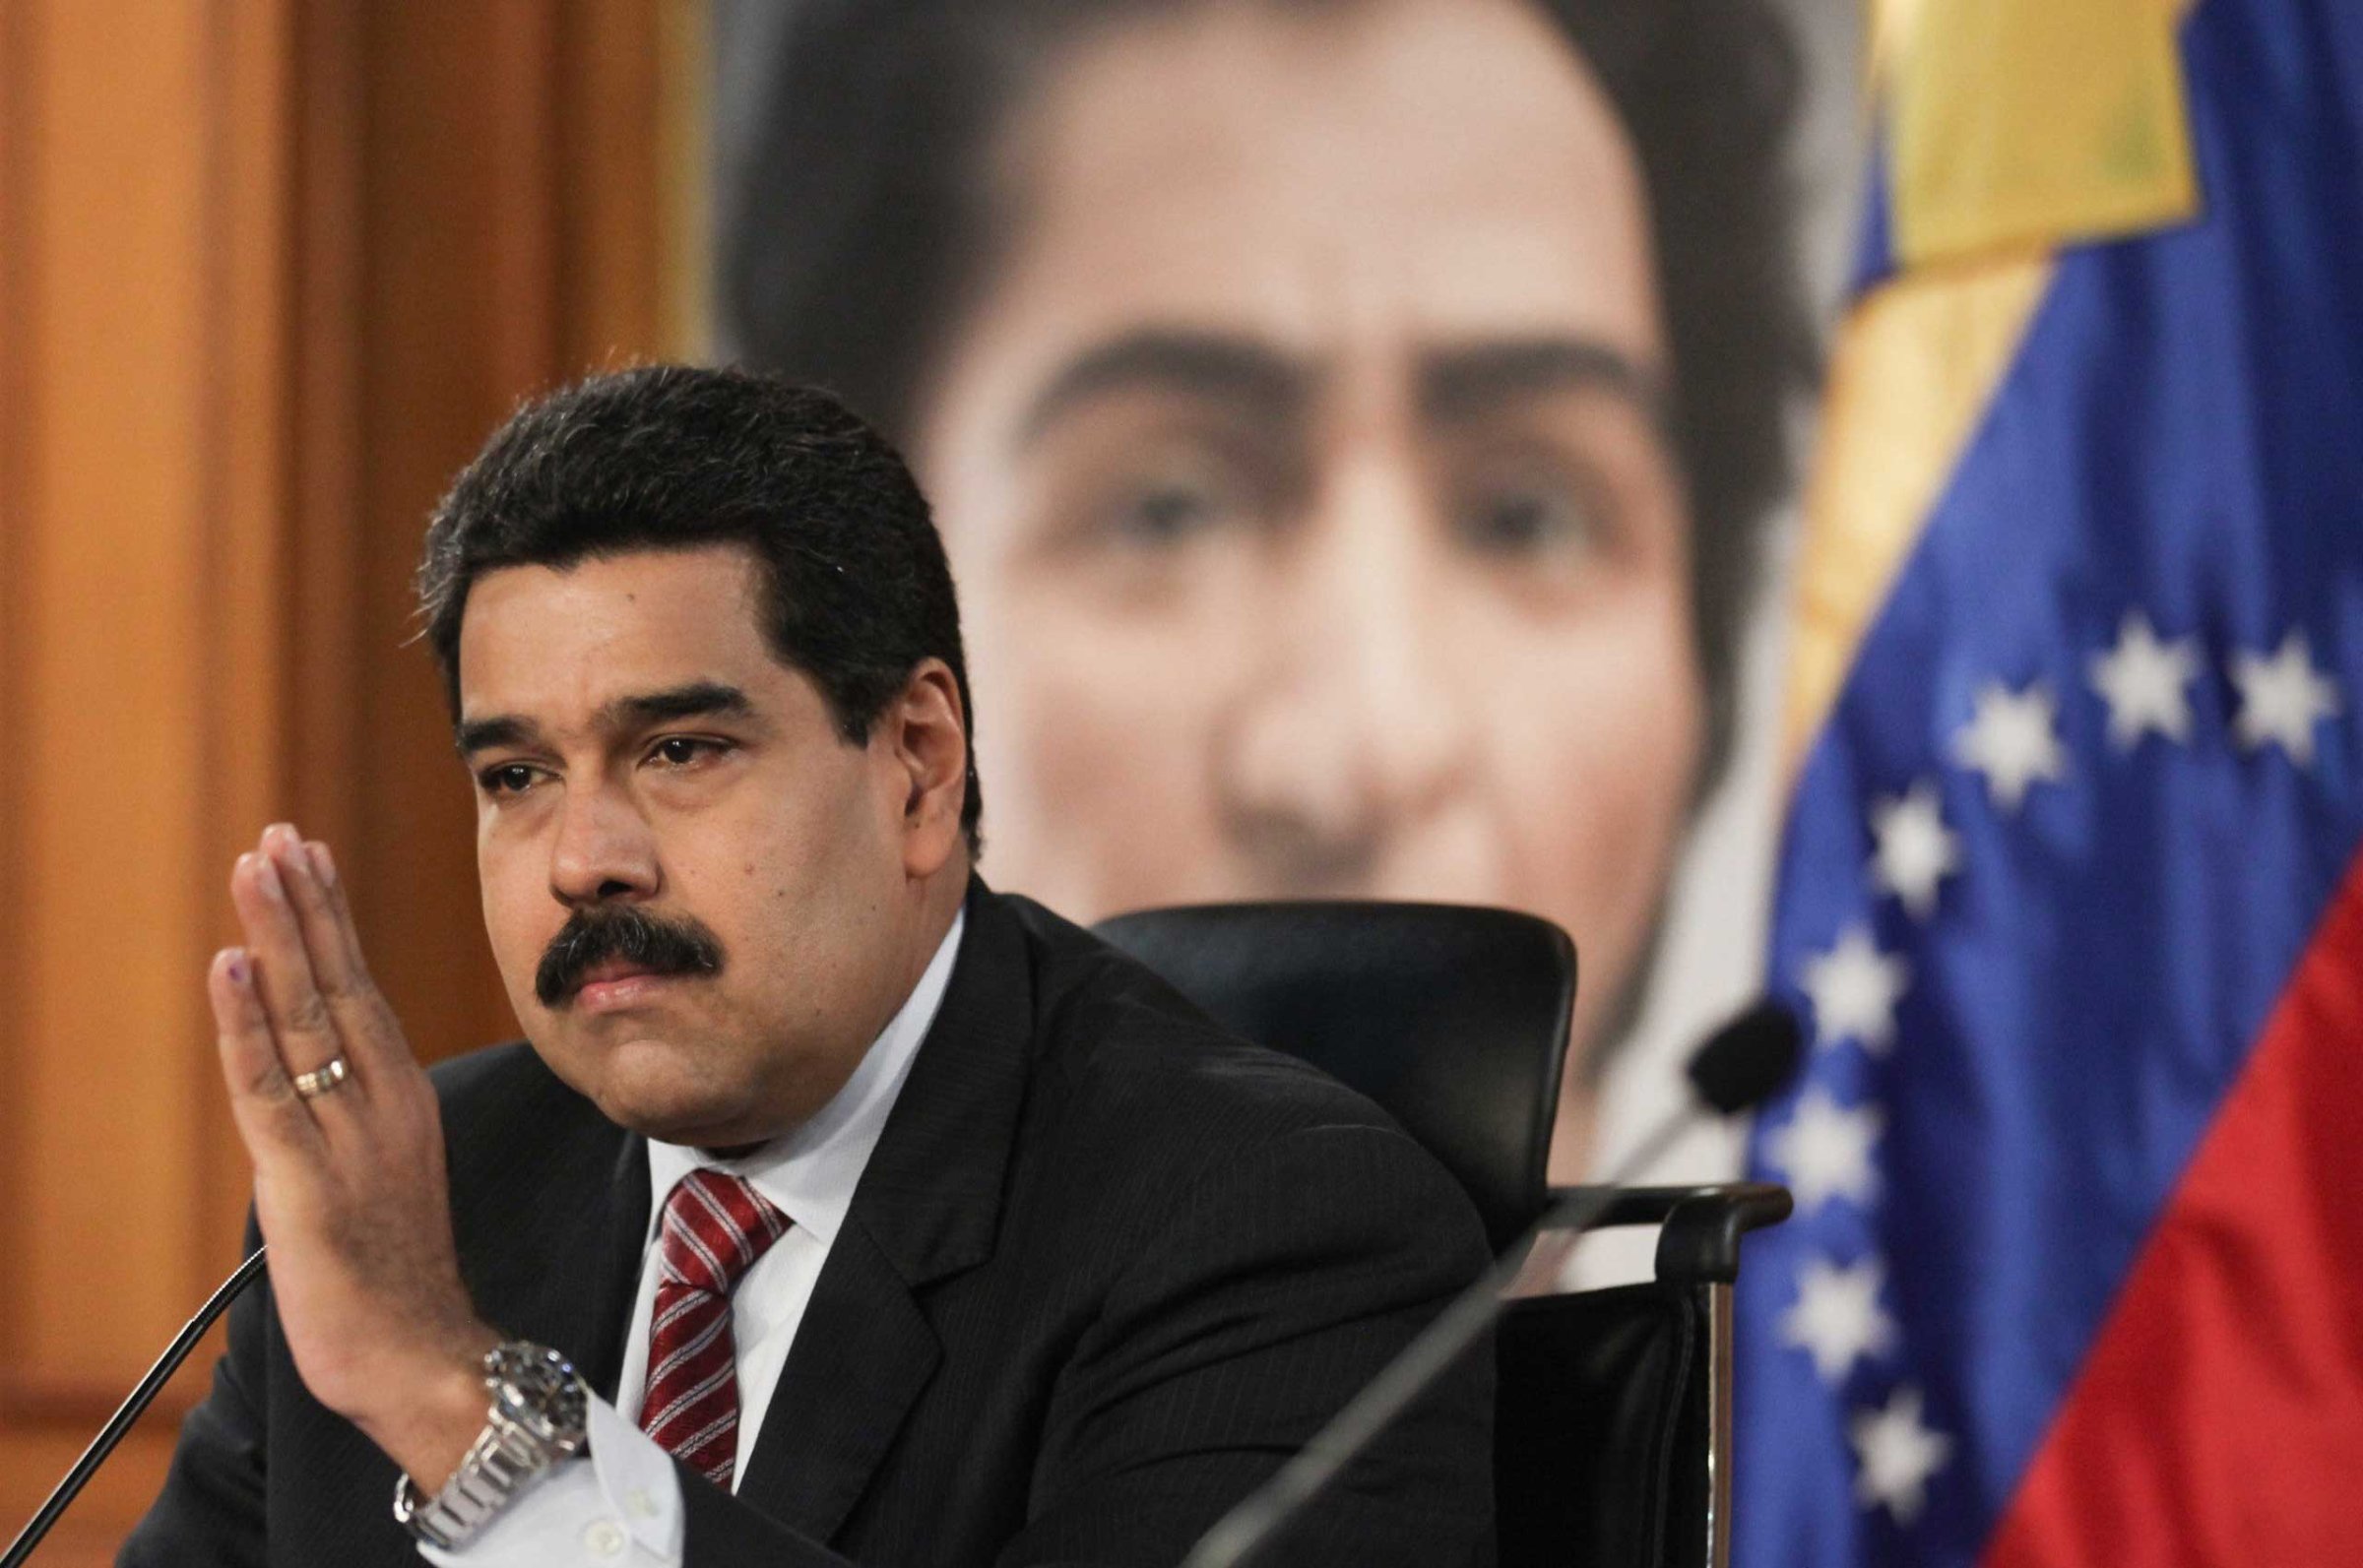 President Nicolas Maduro taking part in a press conference in Caracas, Venezuela, on Dec. 2, 2014.